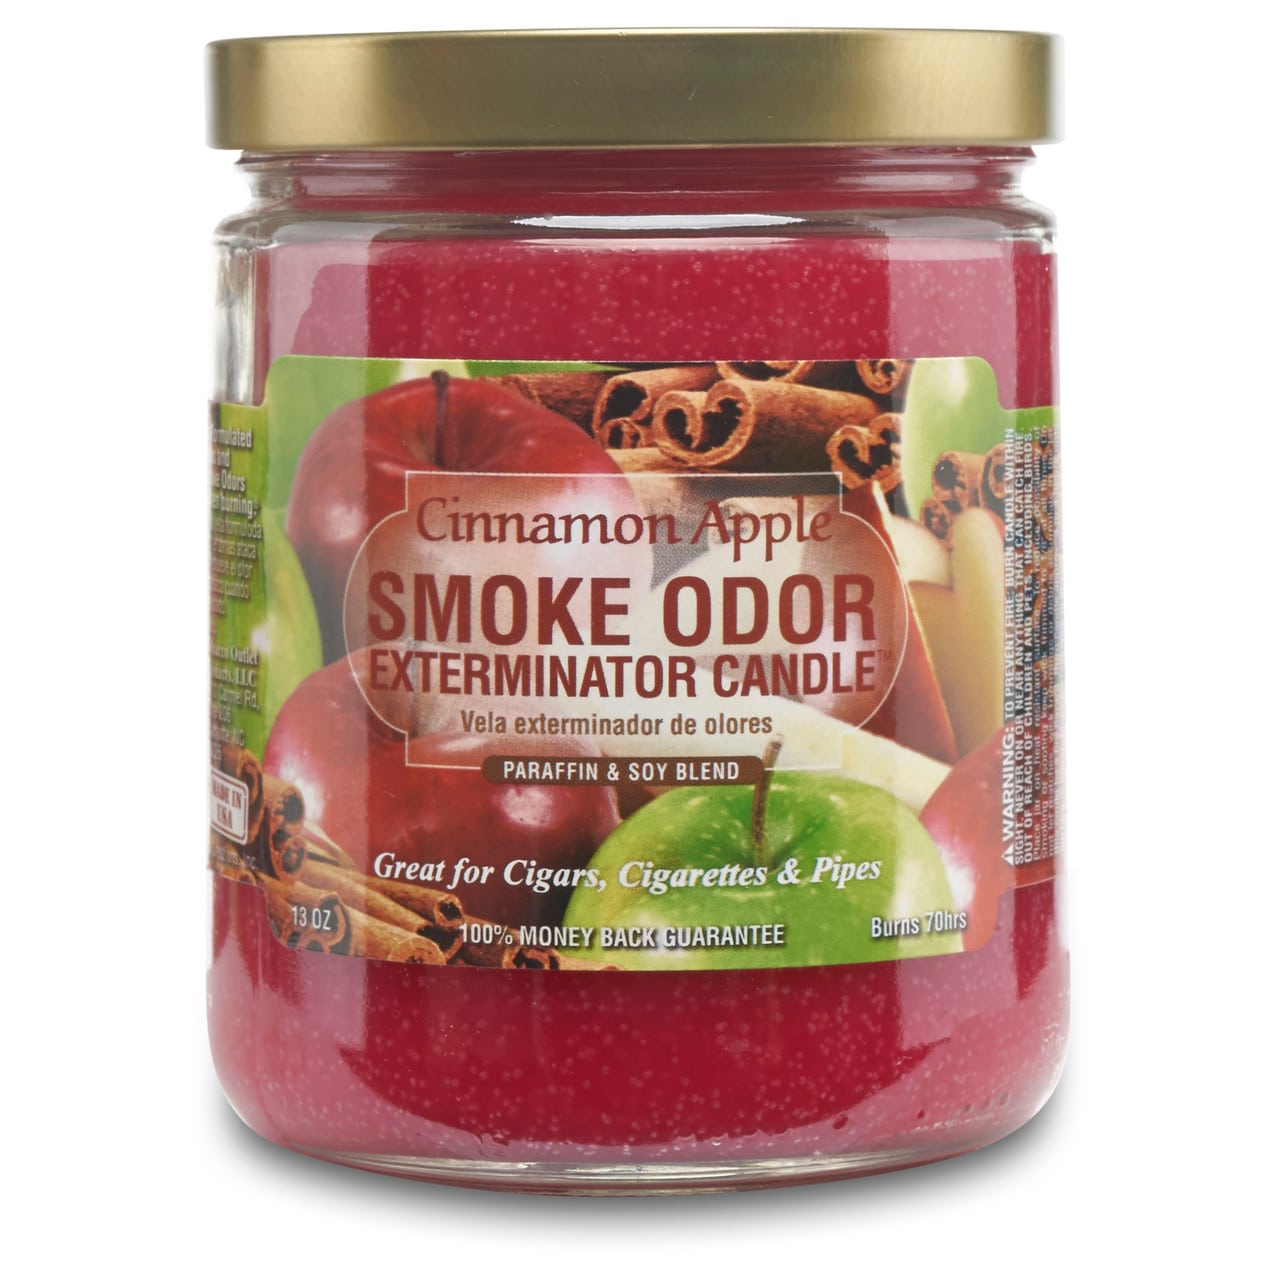 Smoke Odor exterminator candle cinnamon apple